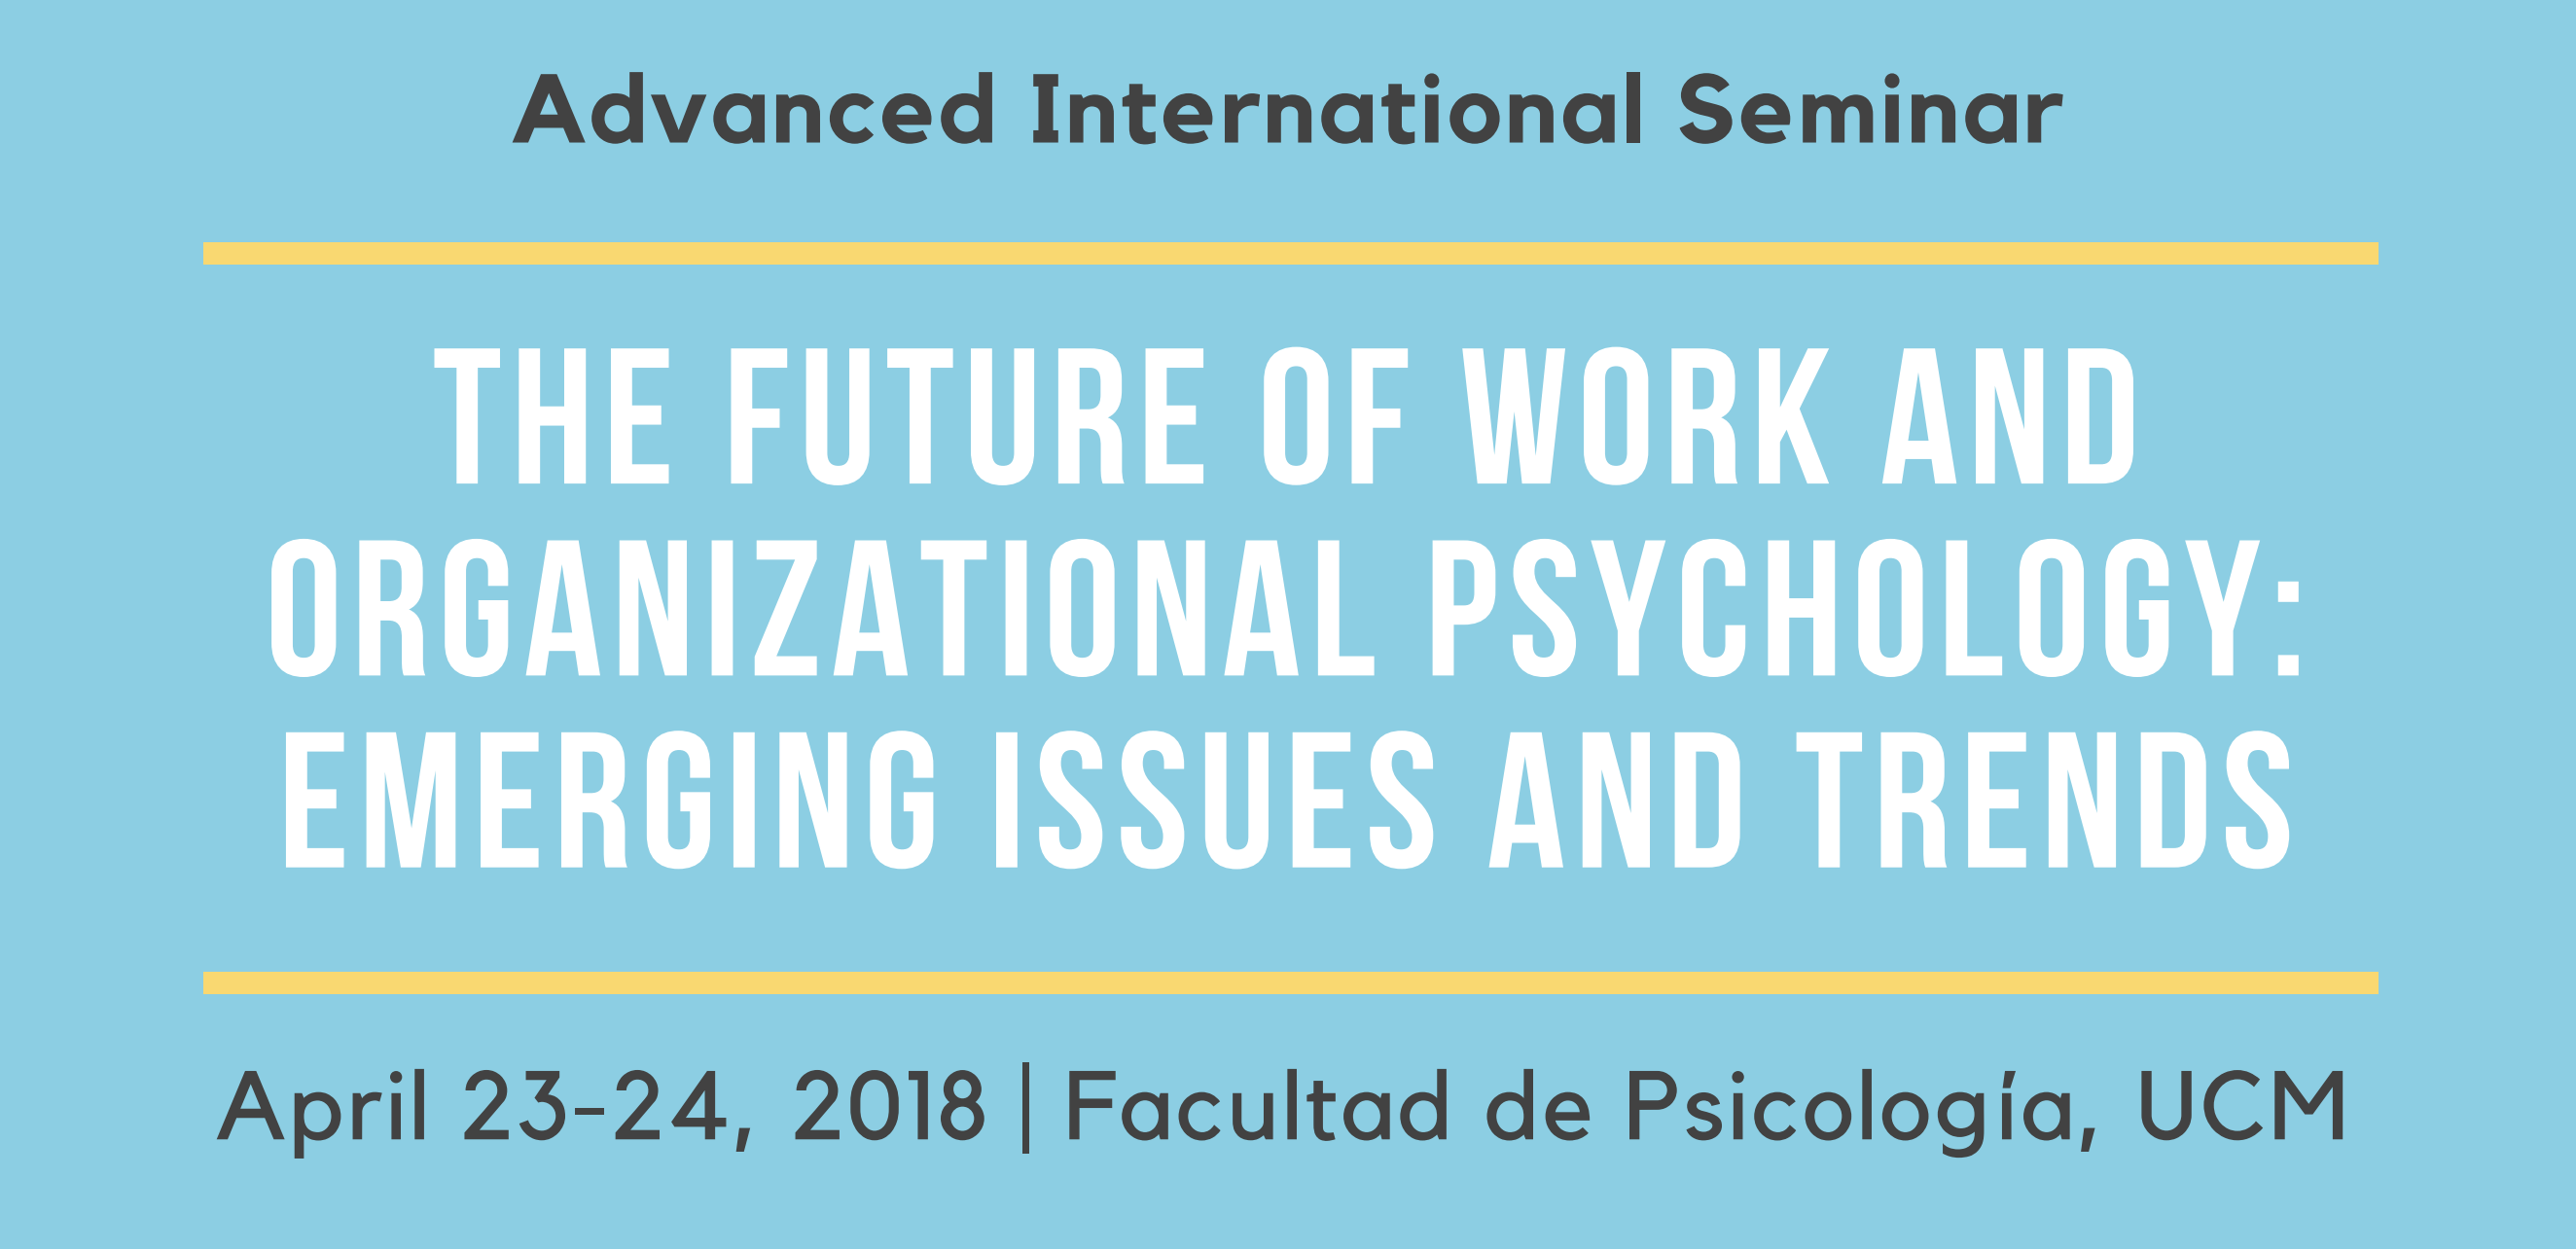 International Seminar “The Future of Work and Organizational Psychology”